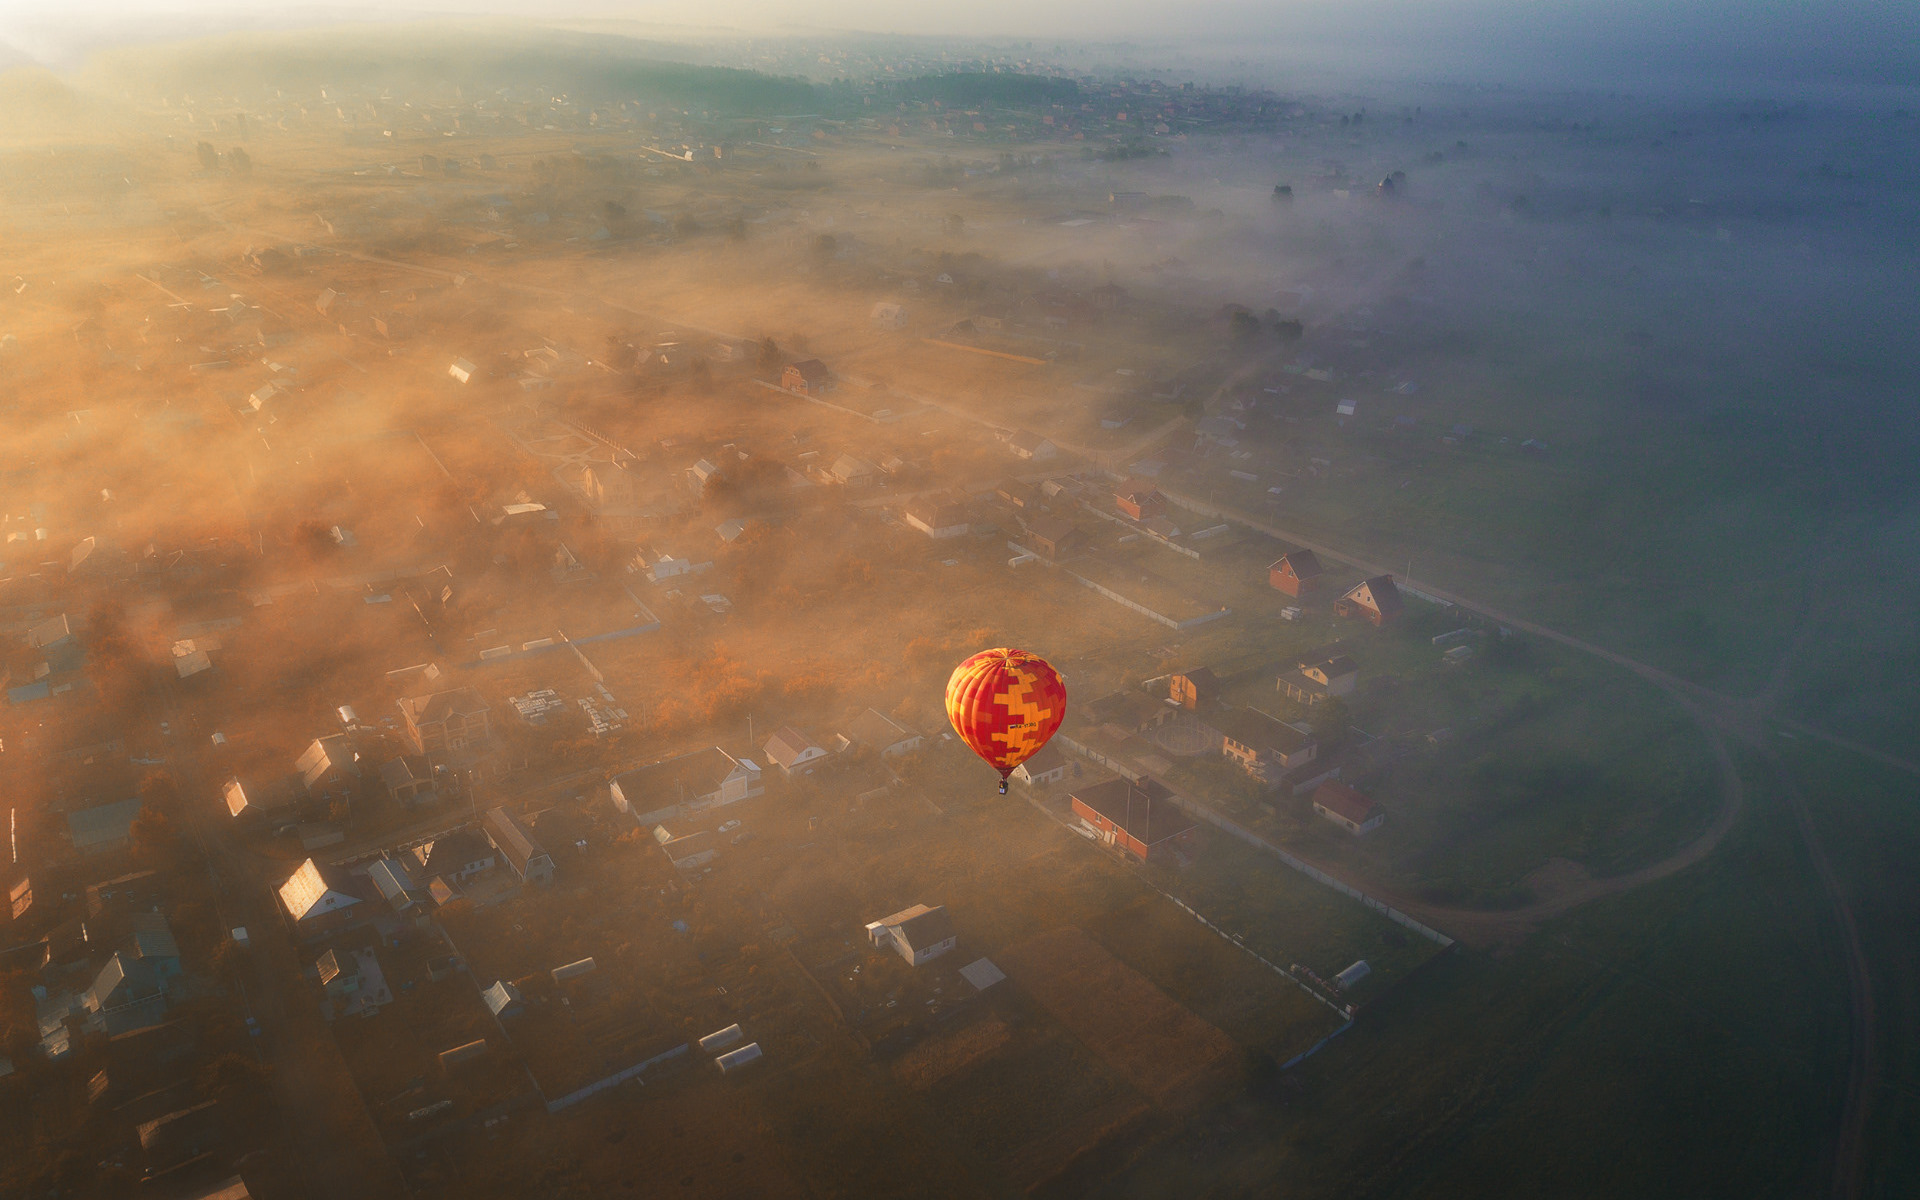 Vehicles Hot Air Balloon HD Wallpaper | Background Image